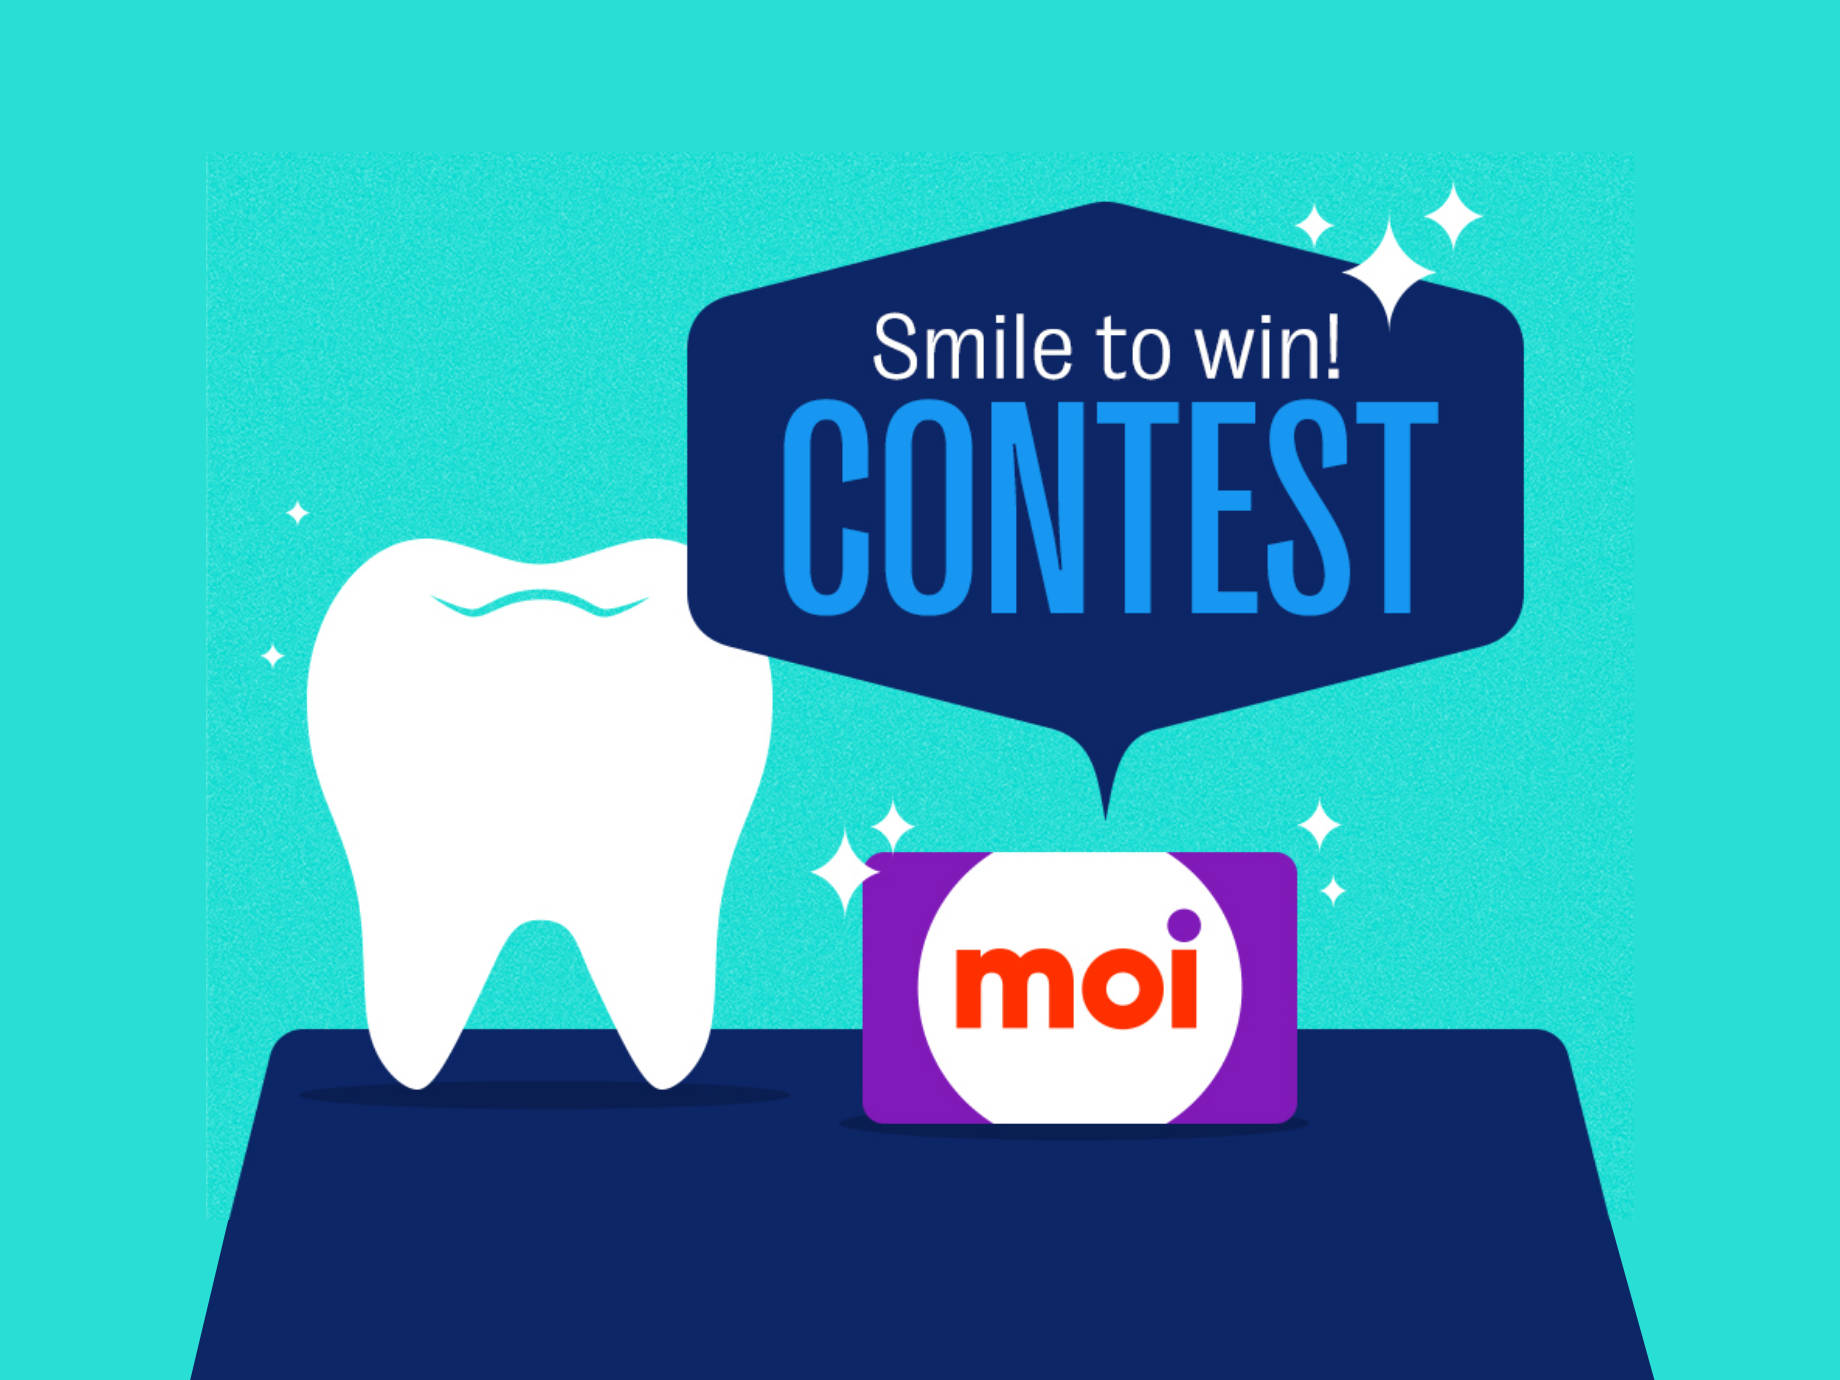 Smile to win contest